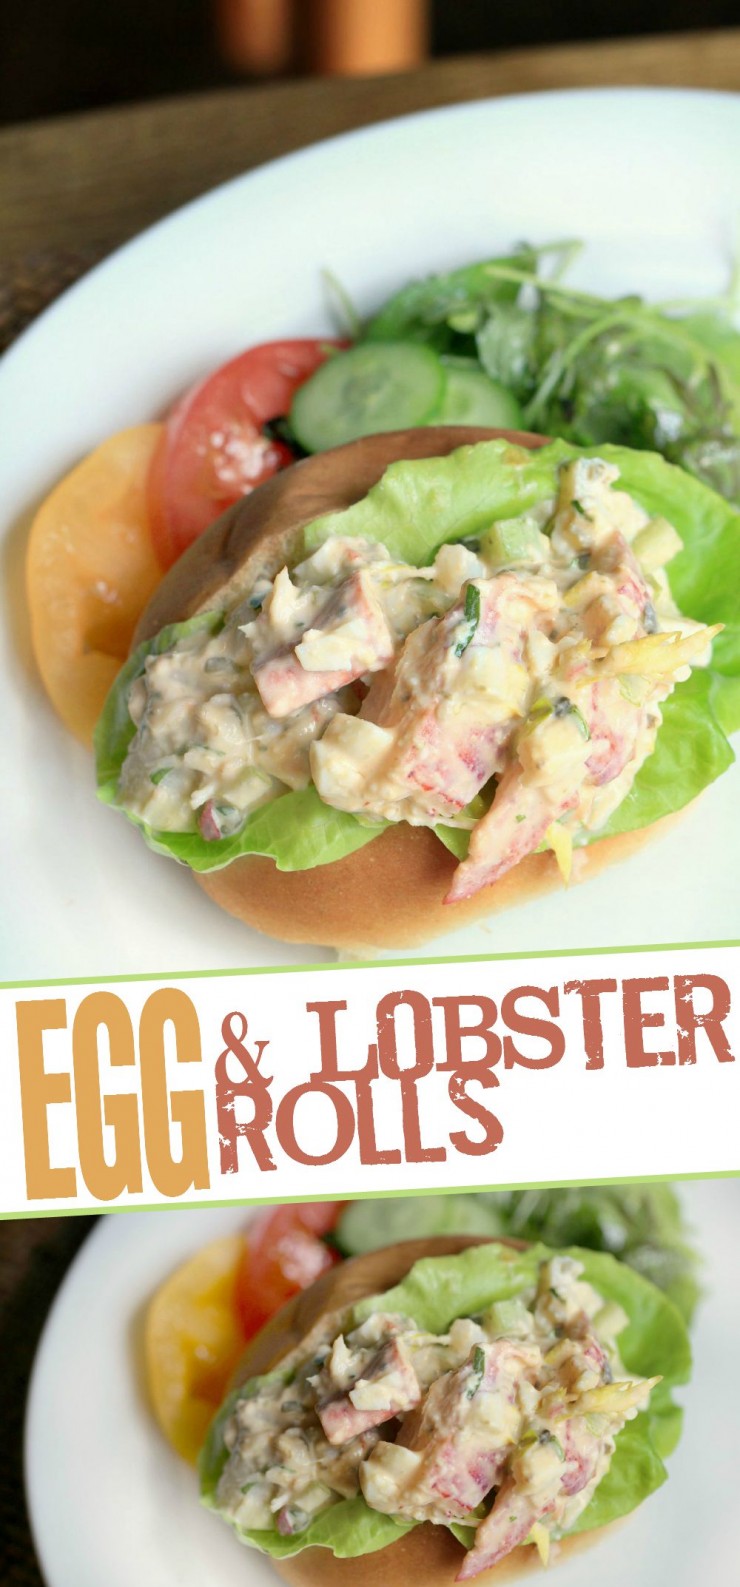 Egg & Lobster Rolls